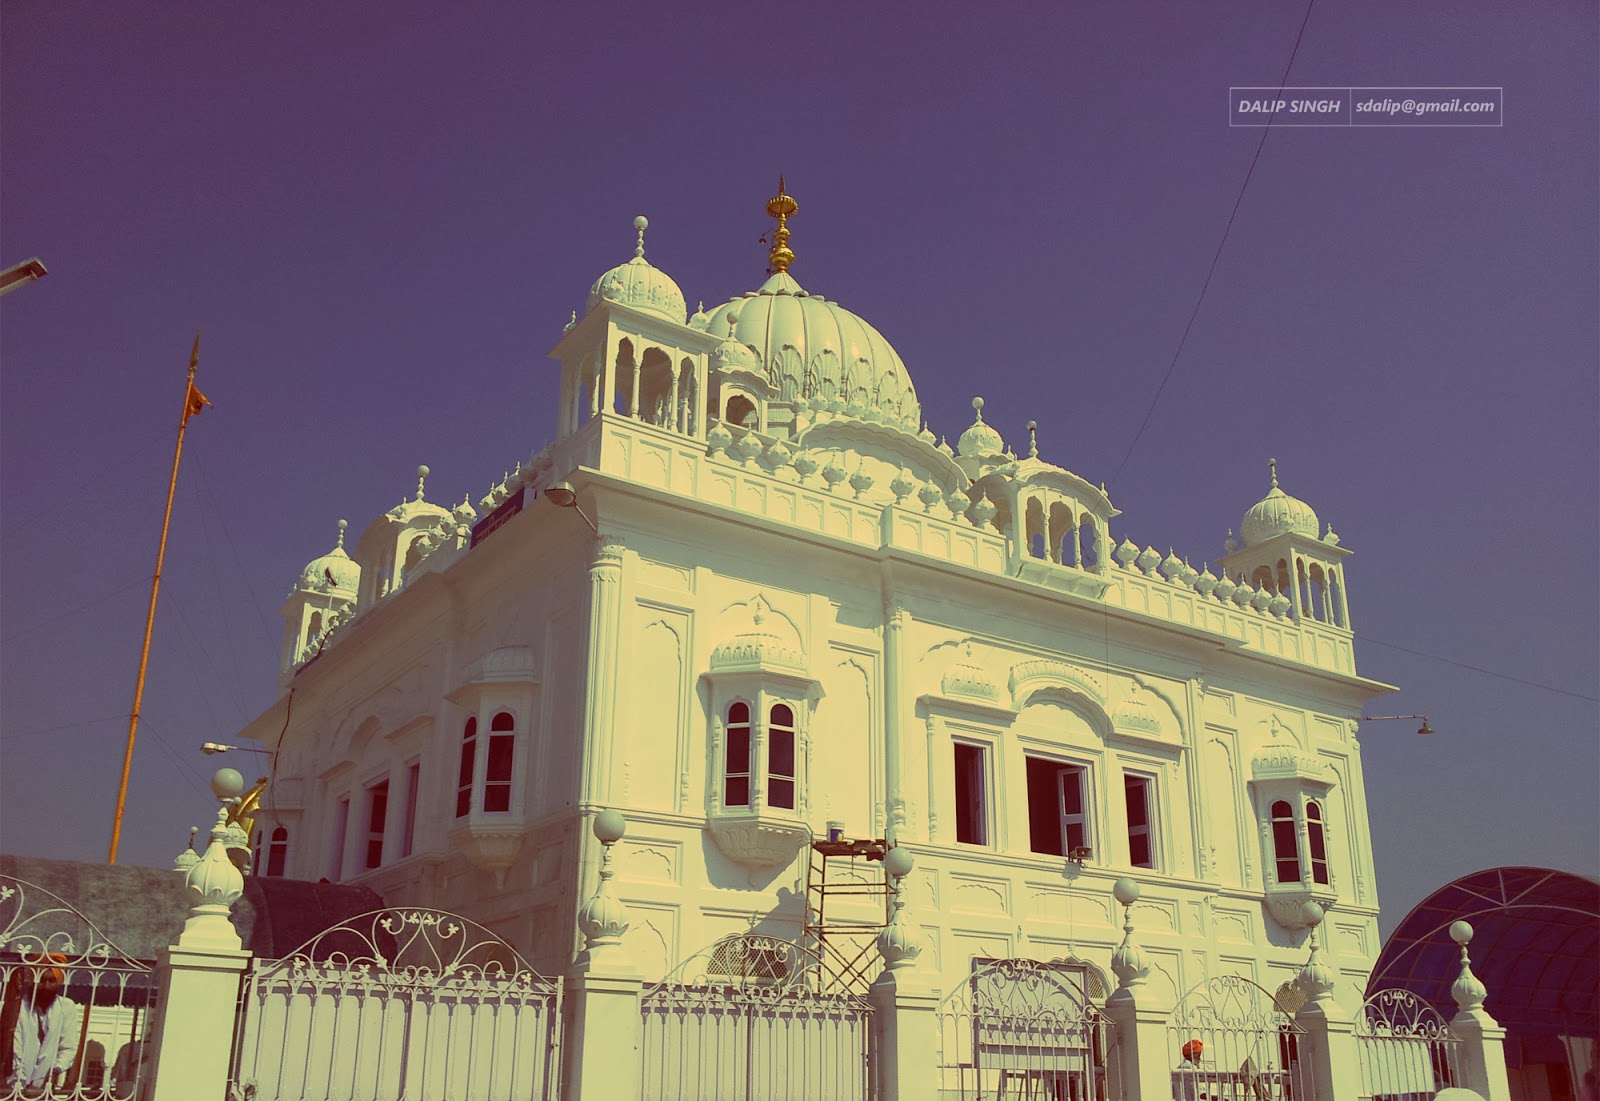 sikh dharmik wallpaper,landmark,building,architecture,sky,place of worship